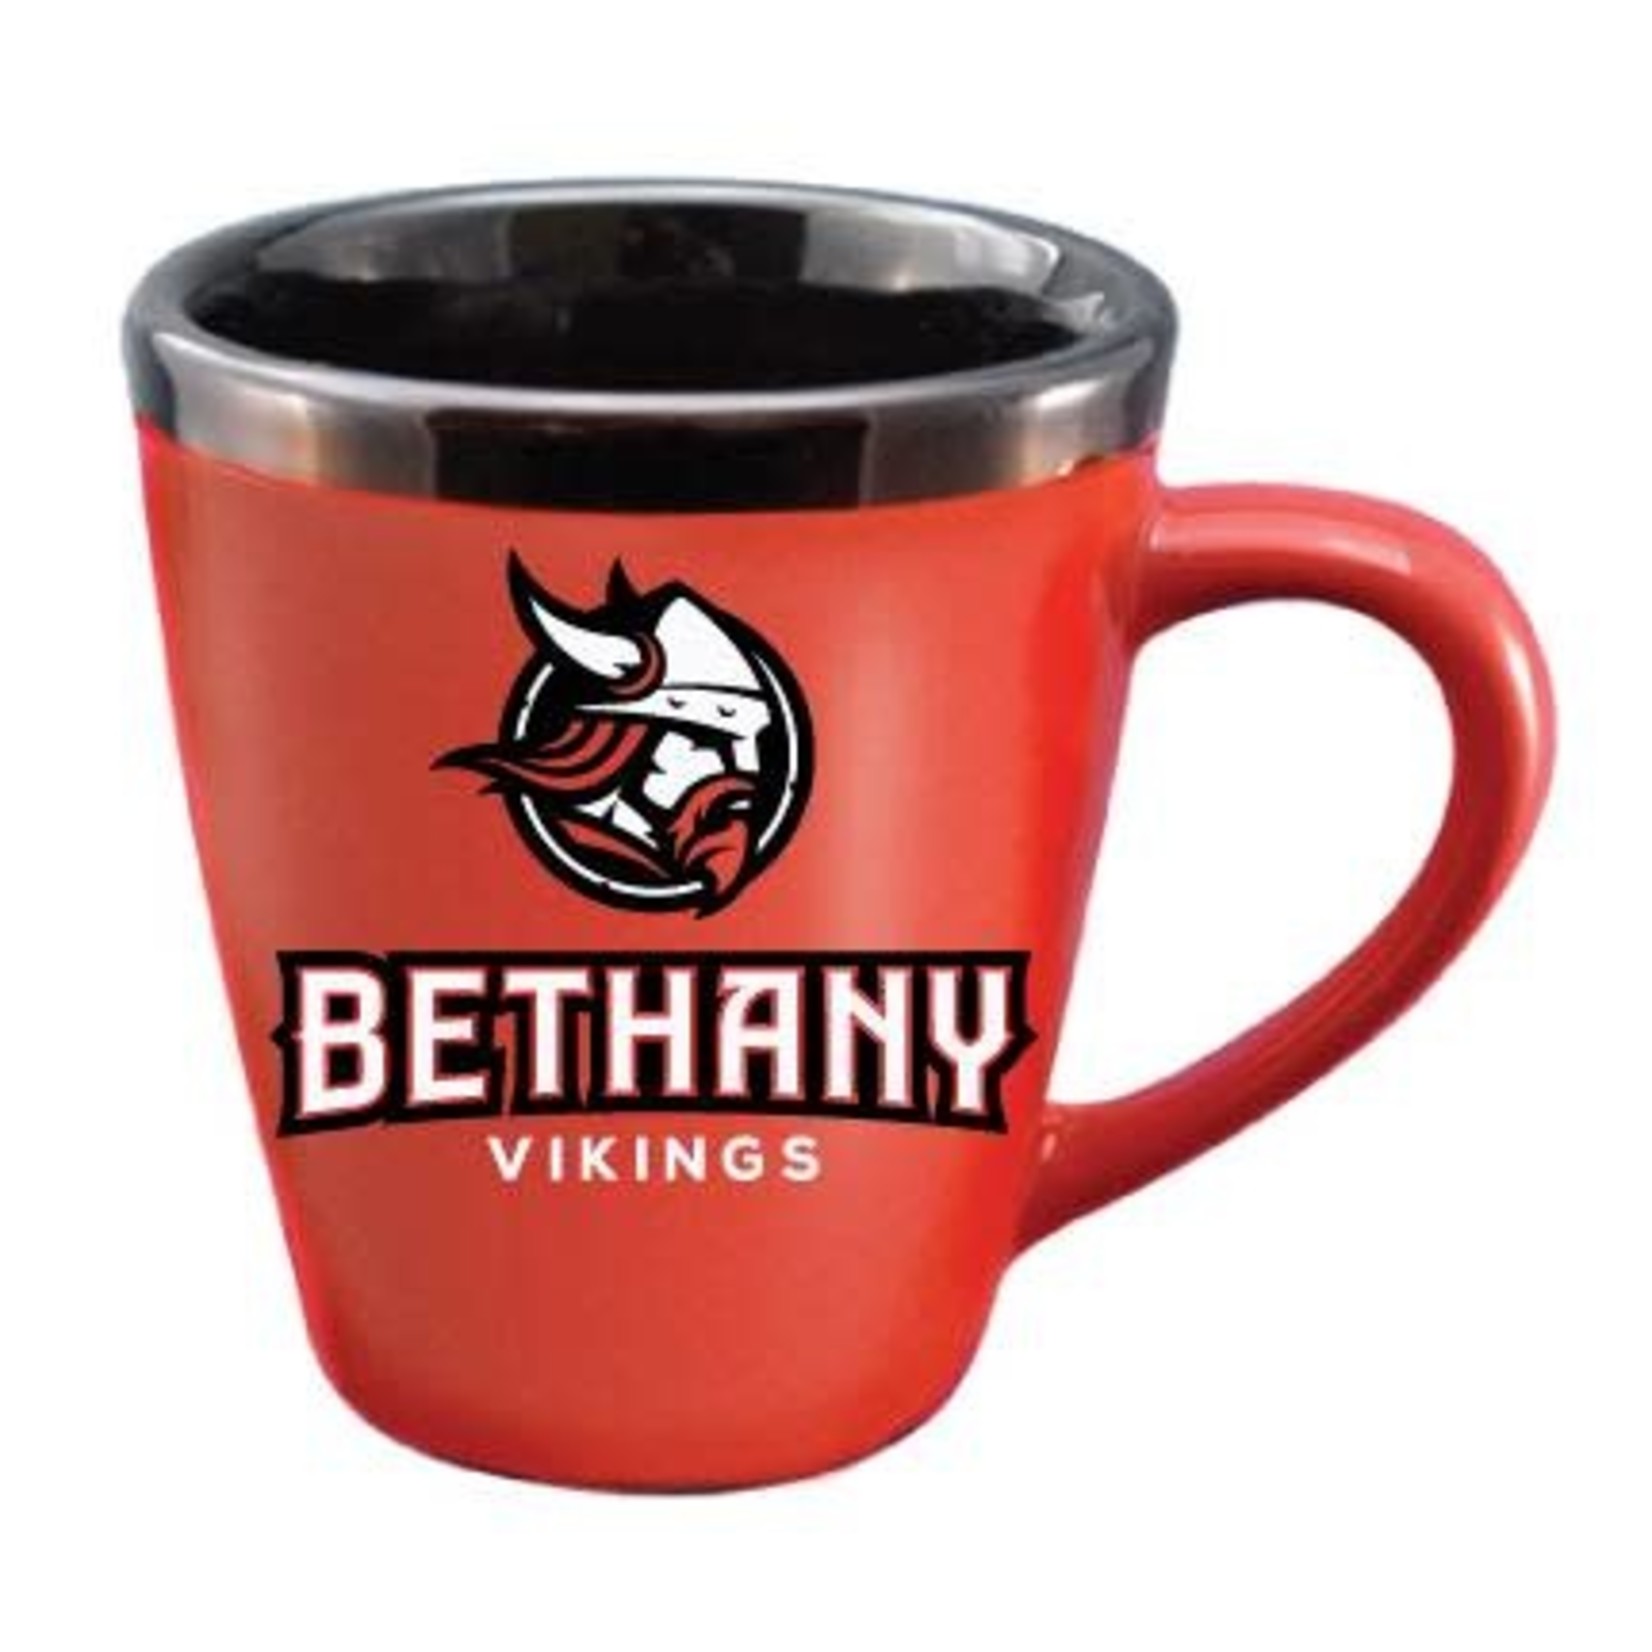 RFSJ Inc. RFSJ Inc. Bethany Vikings Ceramic Mug - Red/Black